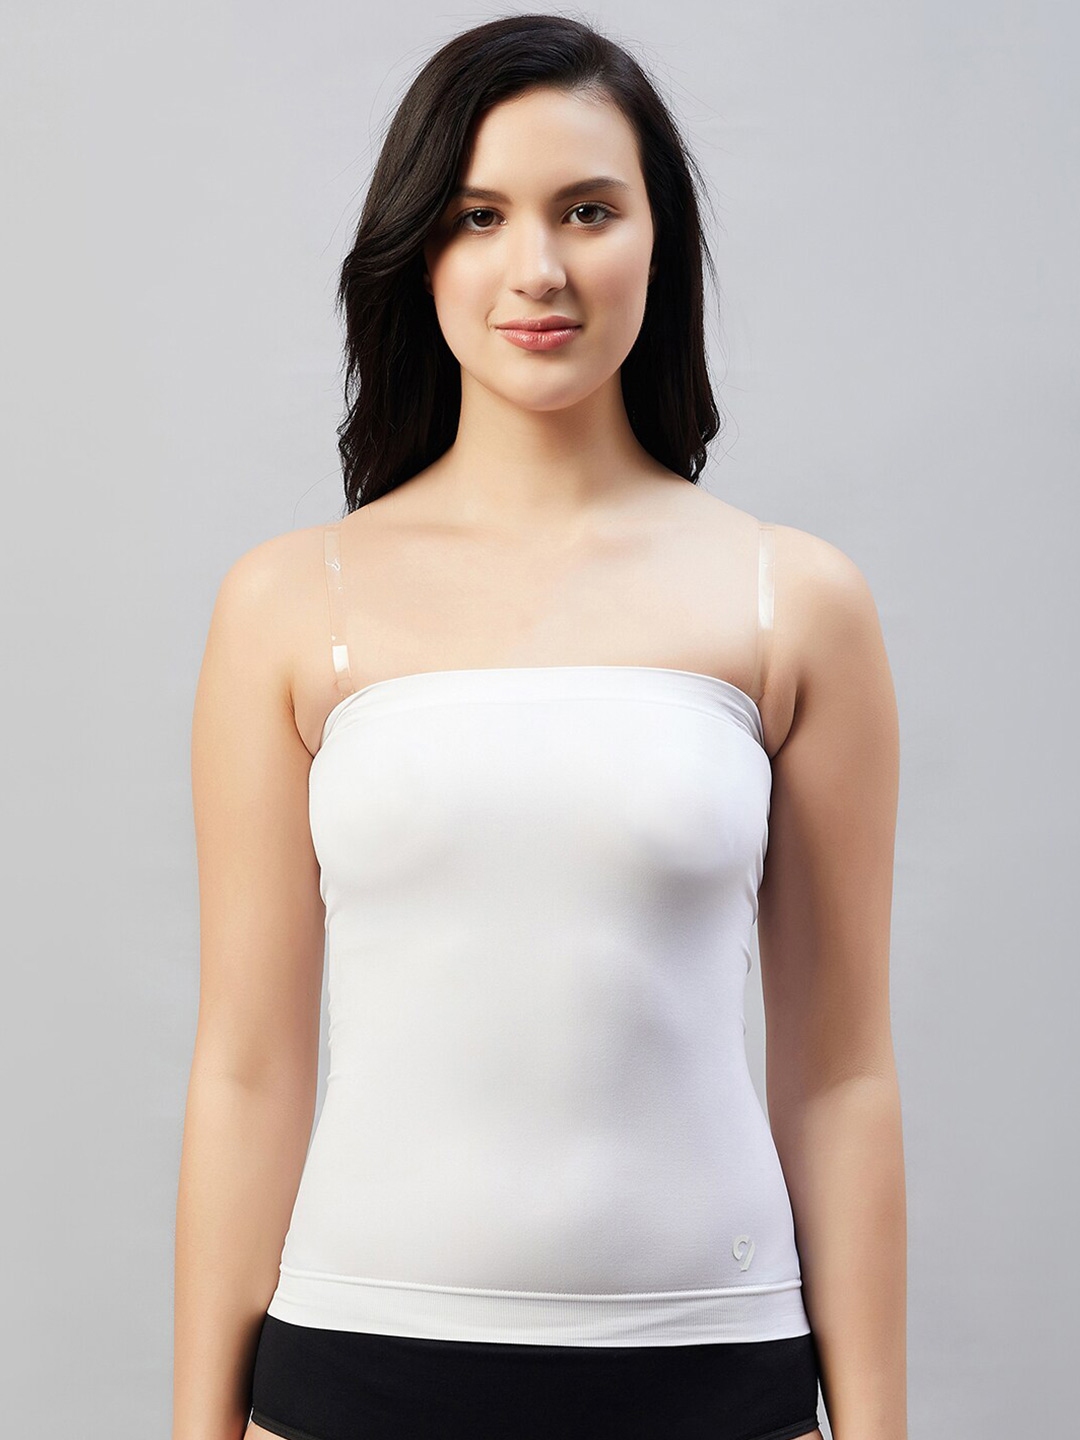 Buy Aimly Women's Regular Fit Sleeveless Cotton Bra Cum Camisole